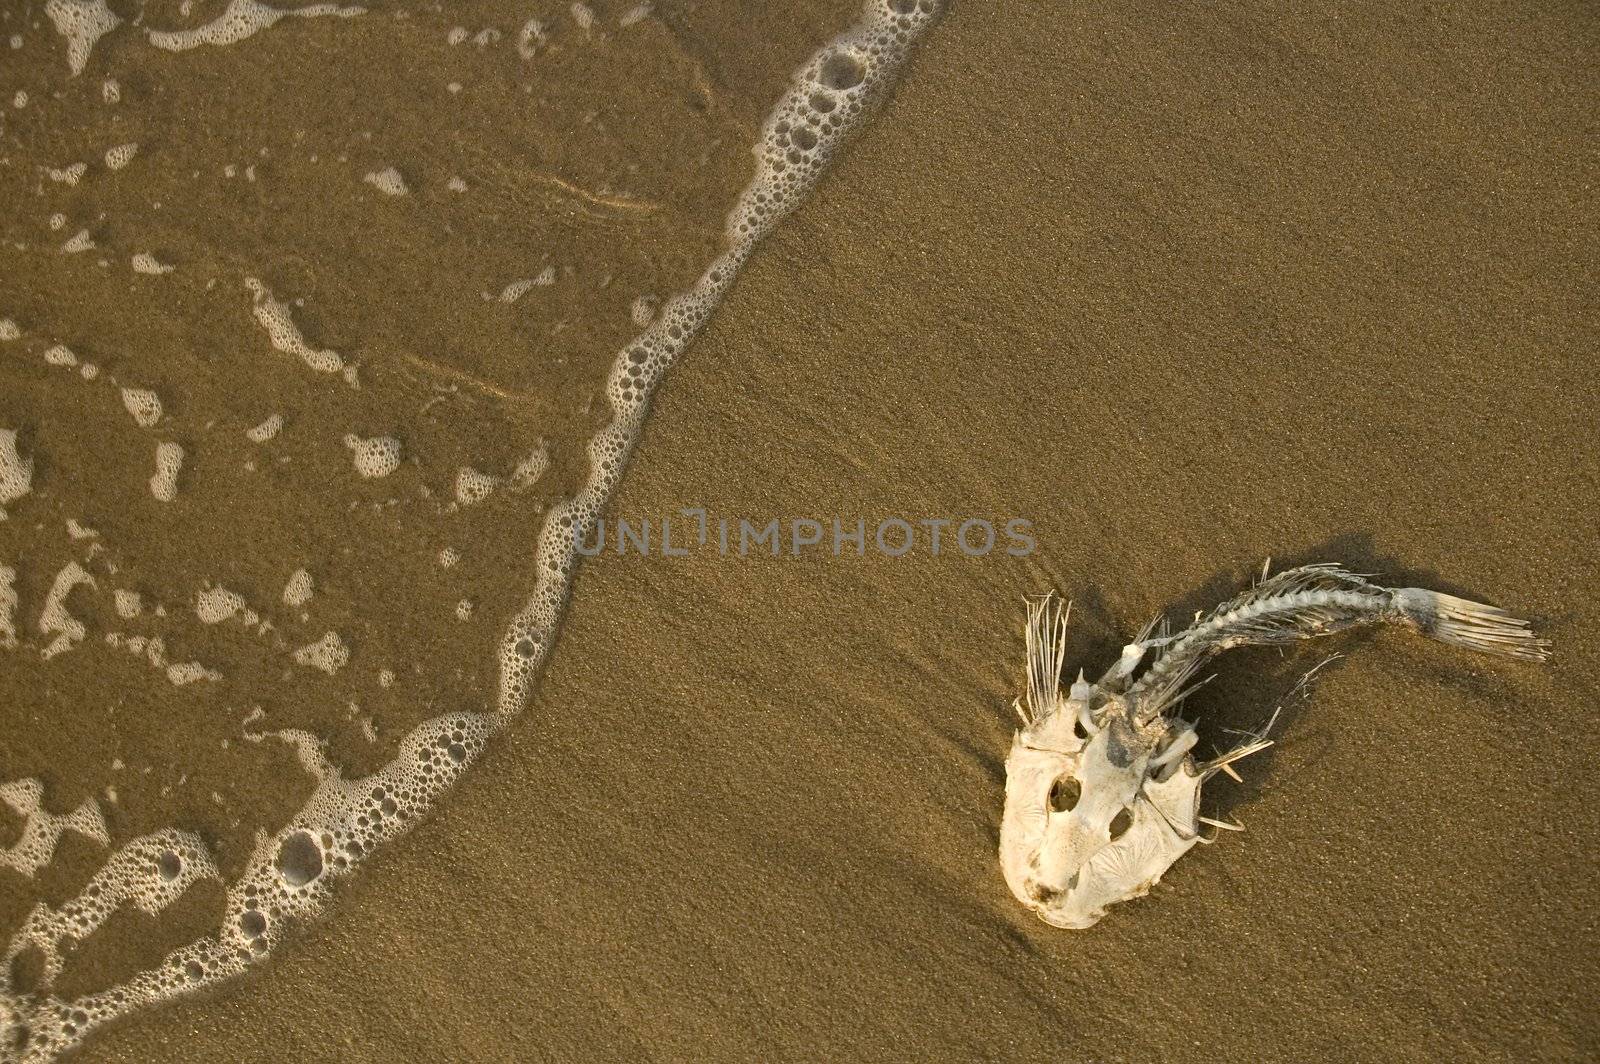 dead fish bones stranded on sand, ocean water